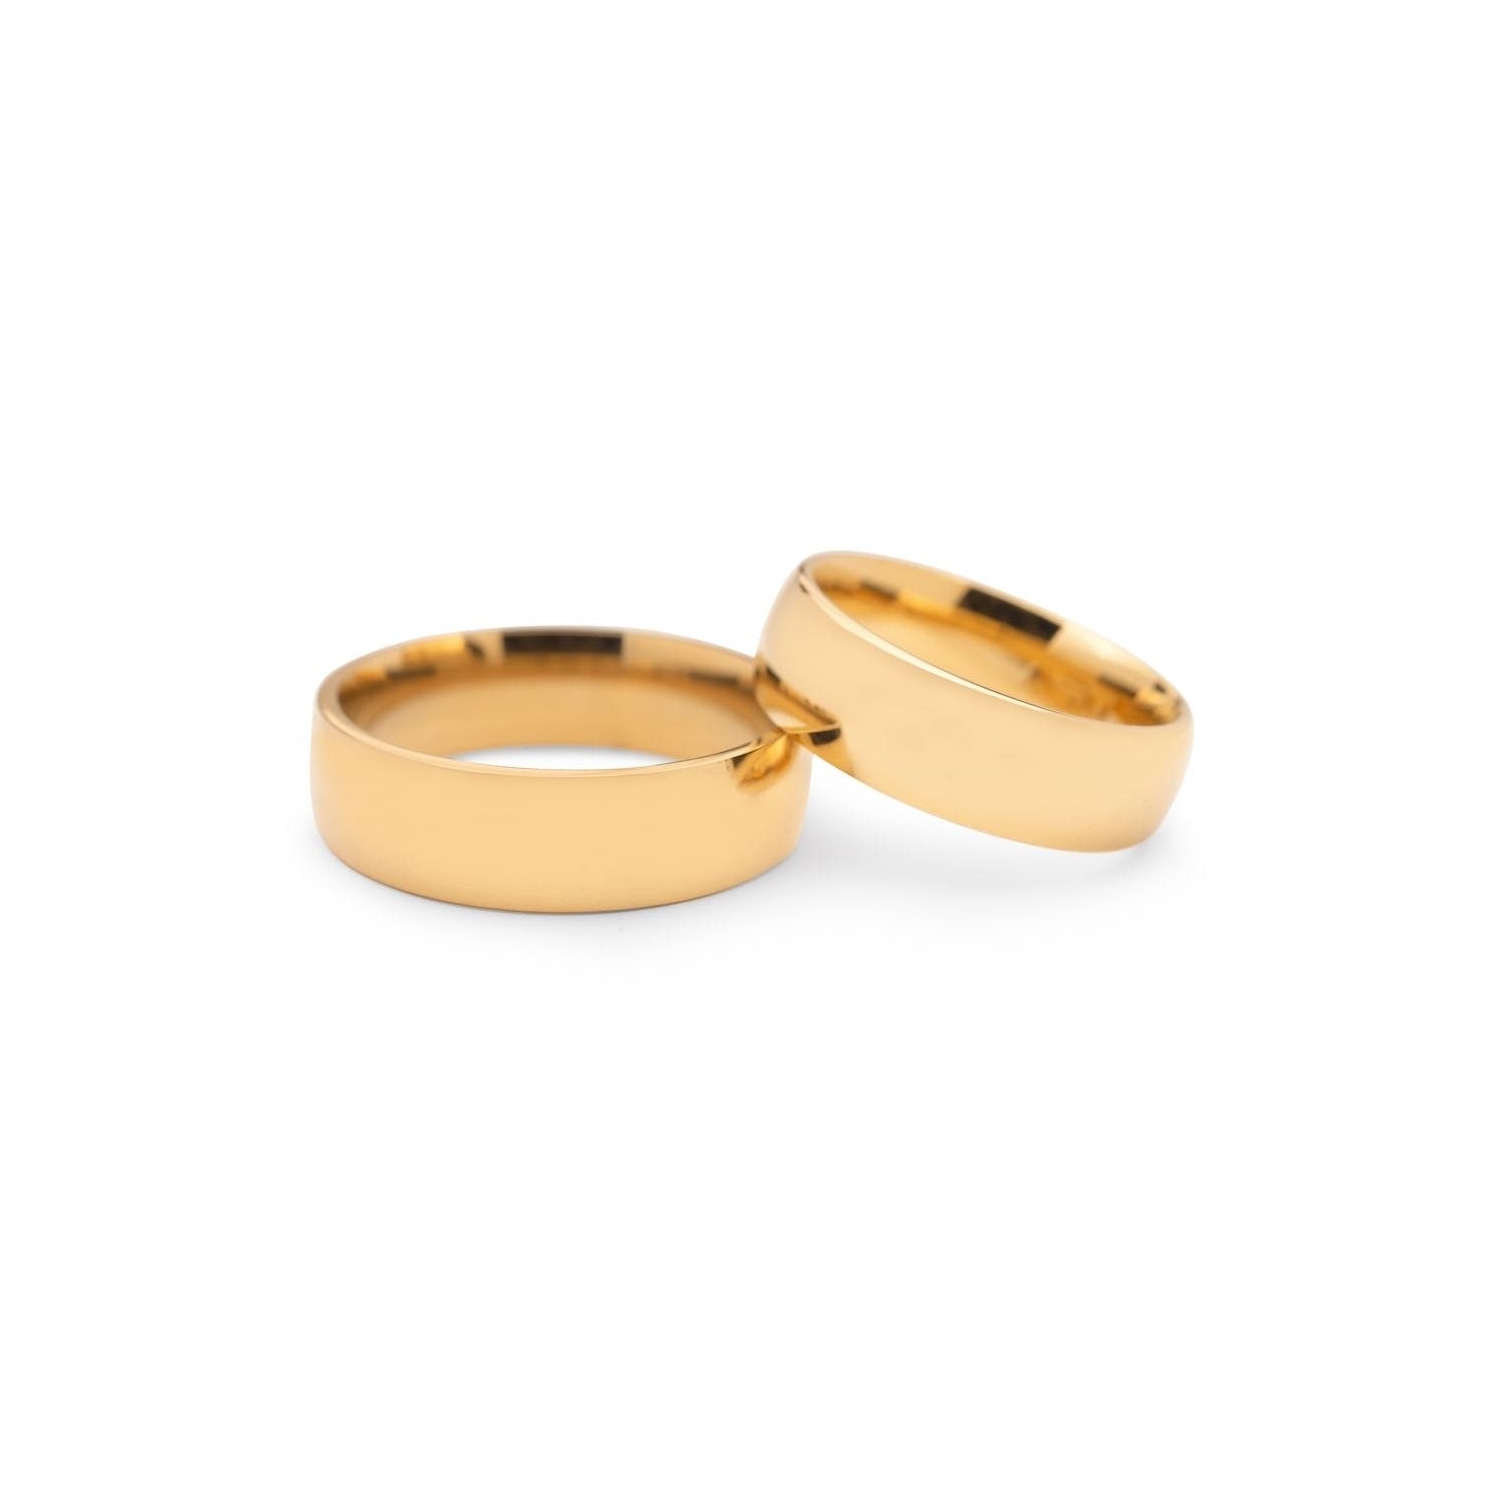 Gold wedding rings "VKA 316"